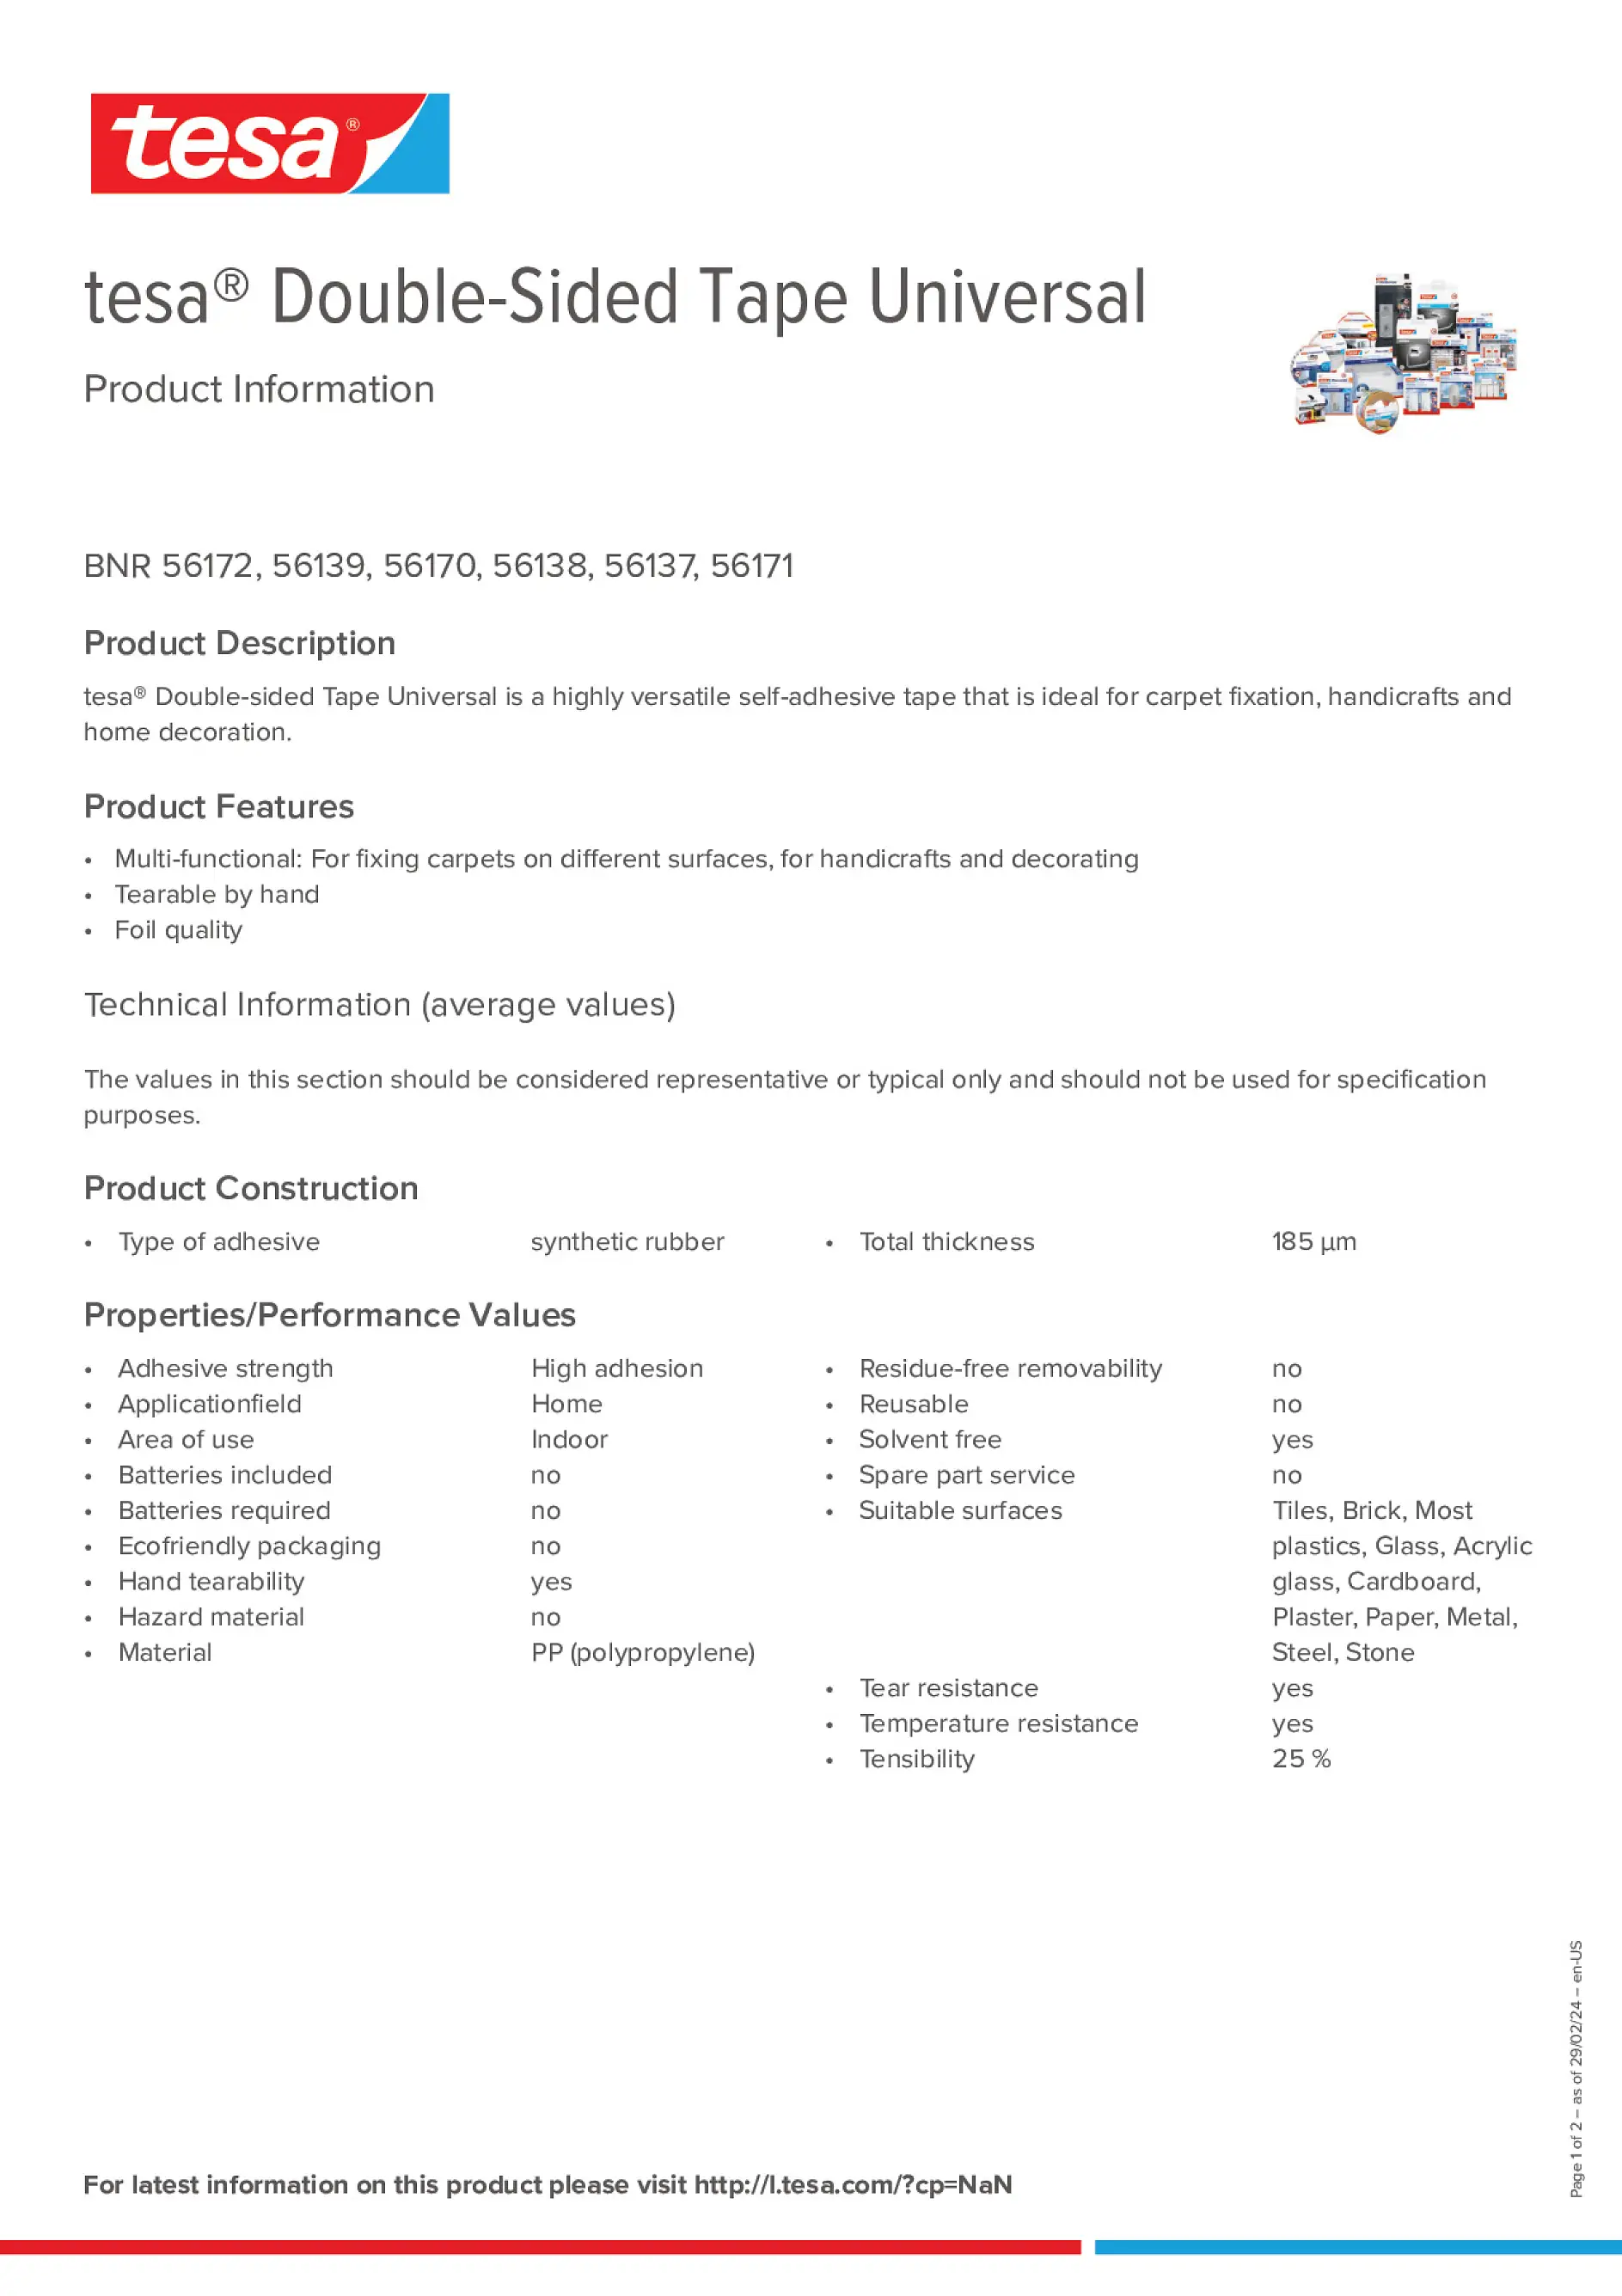 Product information_tesa® 56170_en